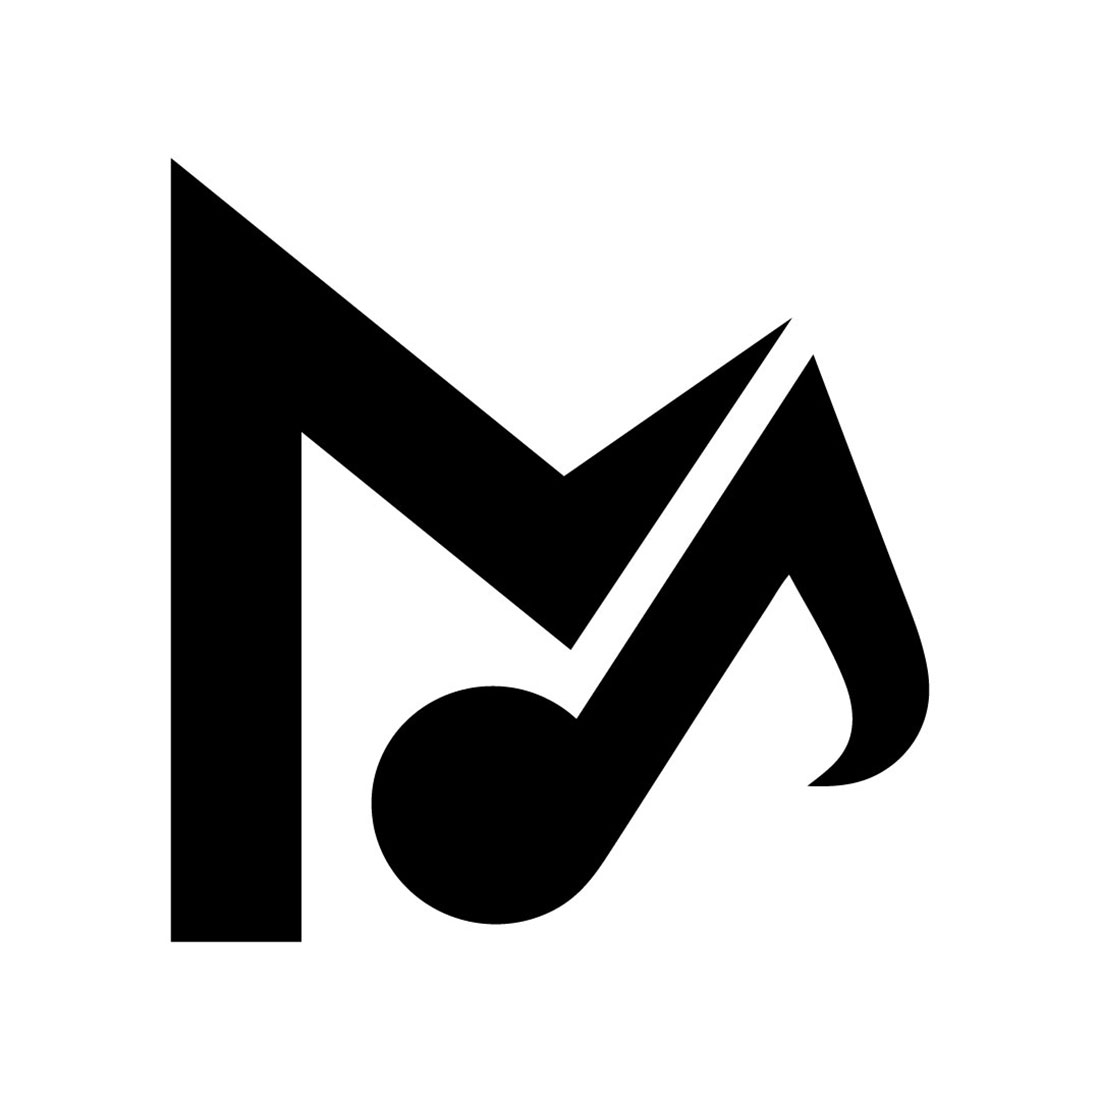 Music MB Studio Letter Black Logo Design preview image.